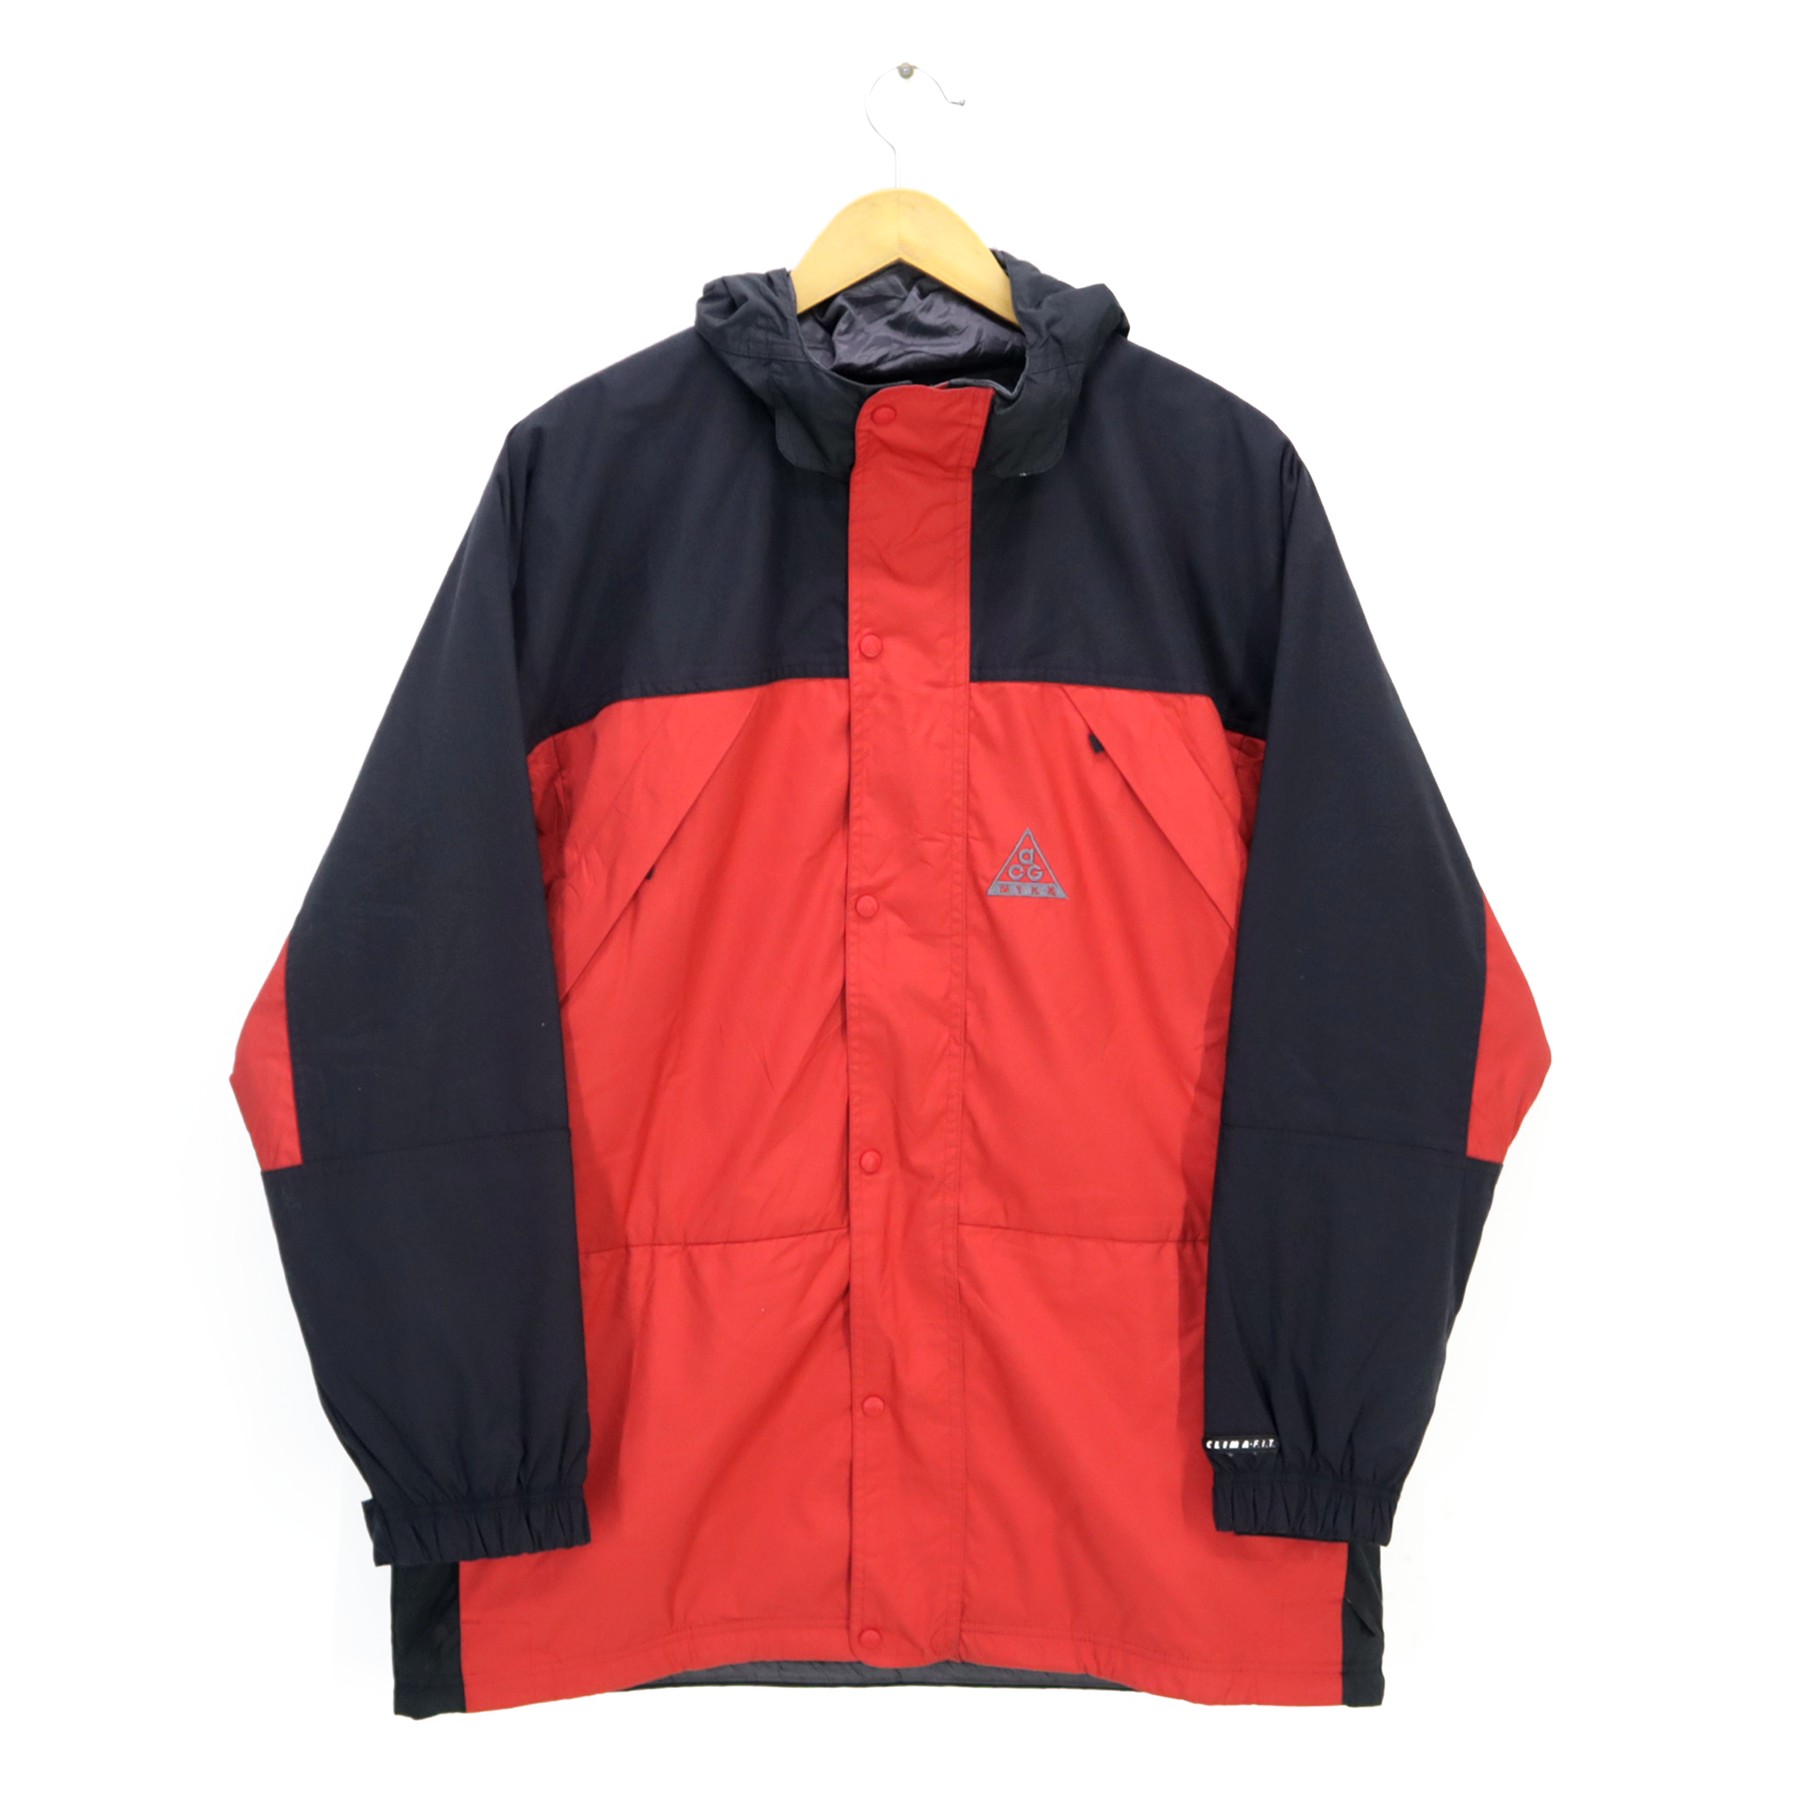 Vintage 90s NIKE ACG Clima FIT Outdoor Winter Coat Parka Color Block Jacket Size Medium - 1